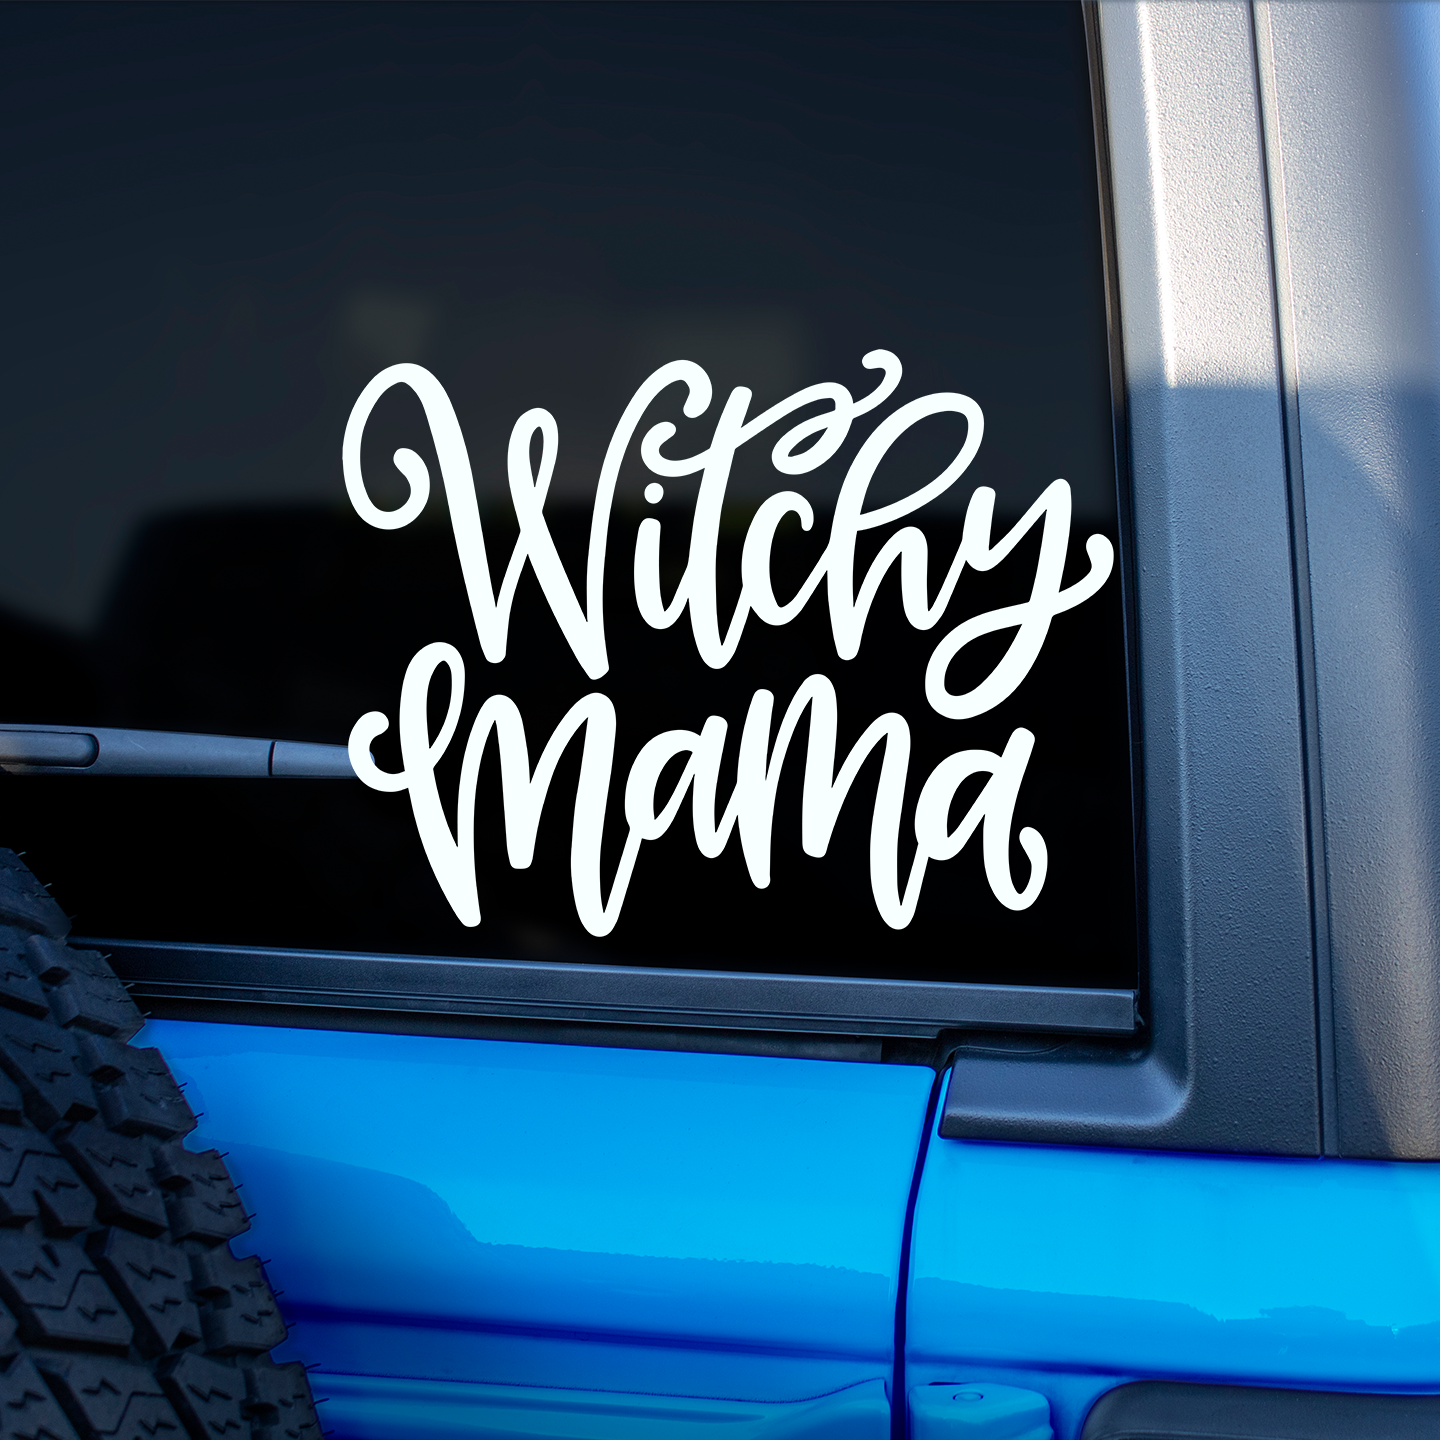 Witchy Mama Sticker